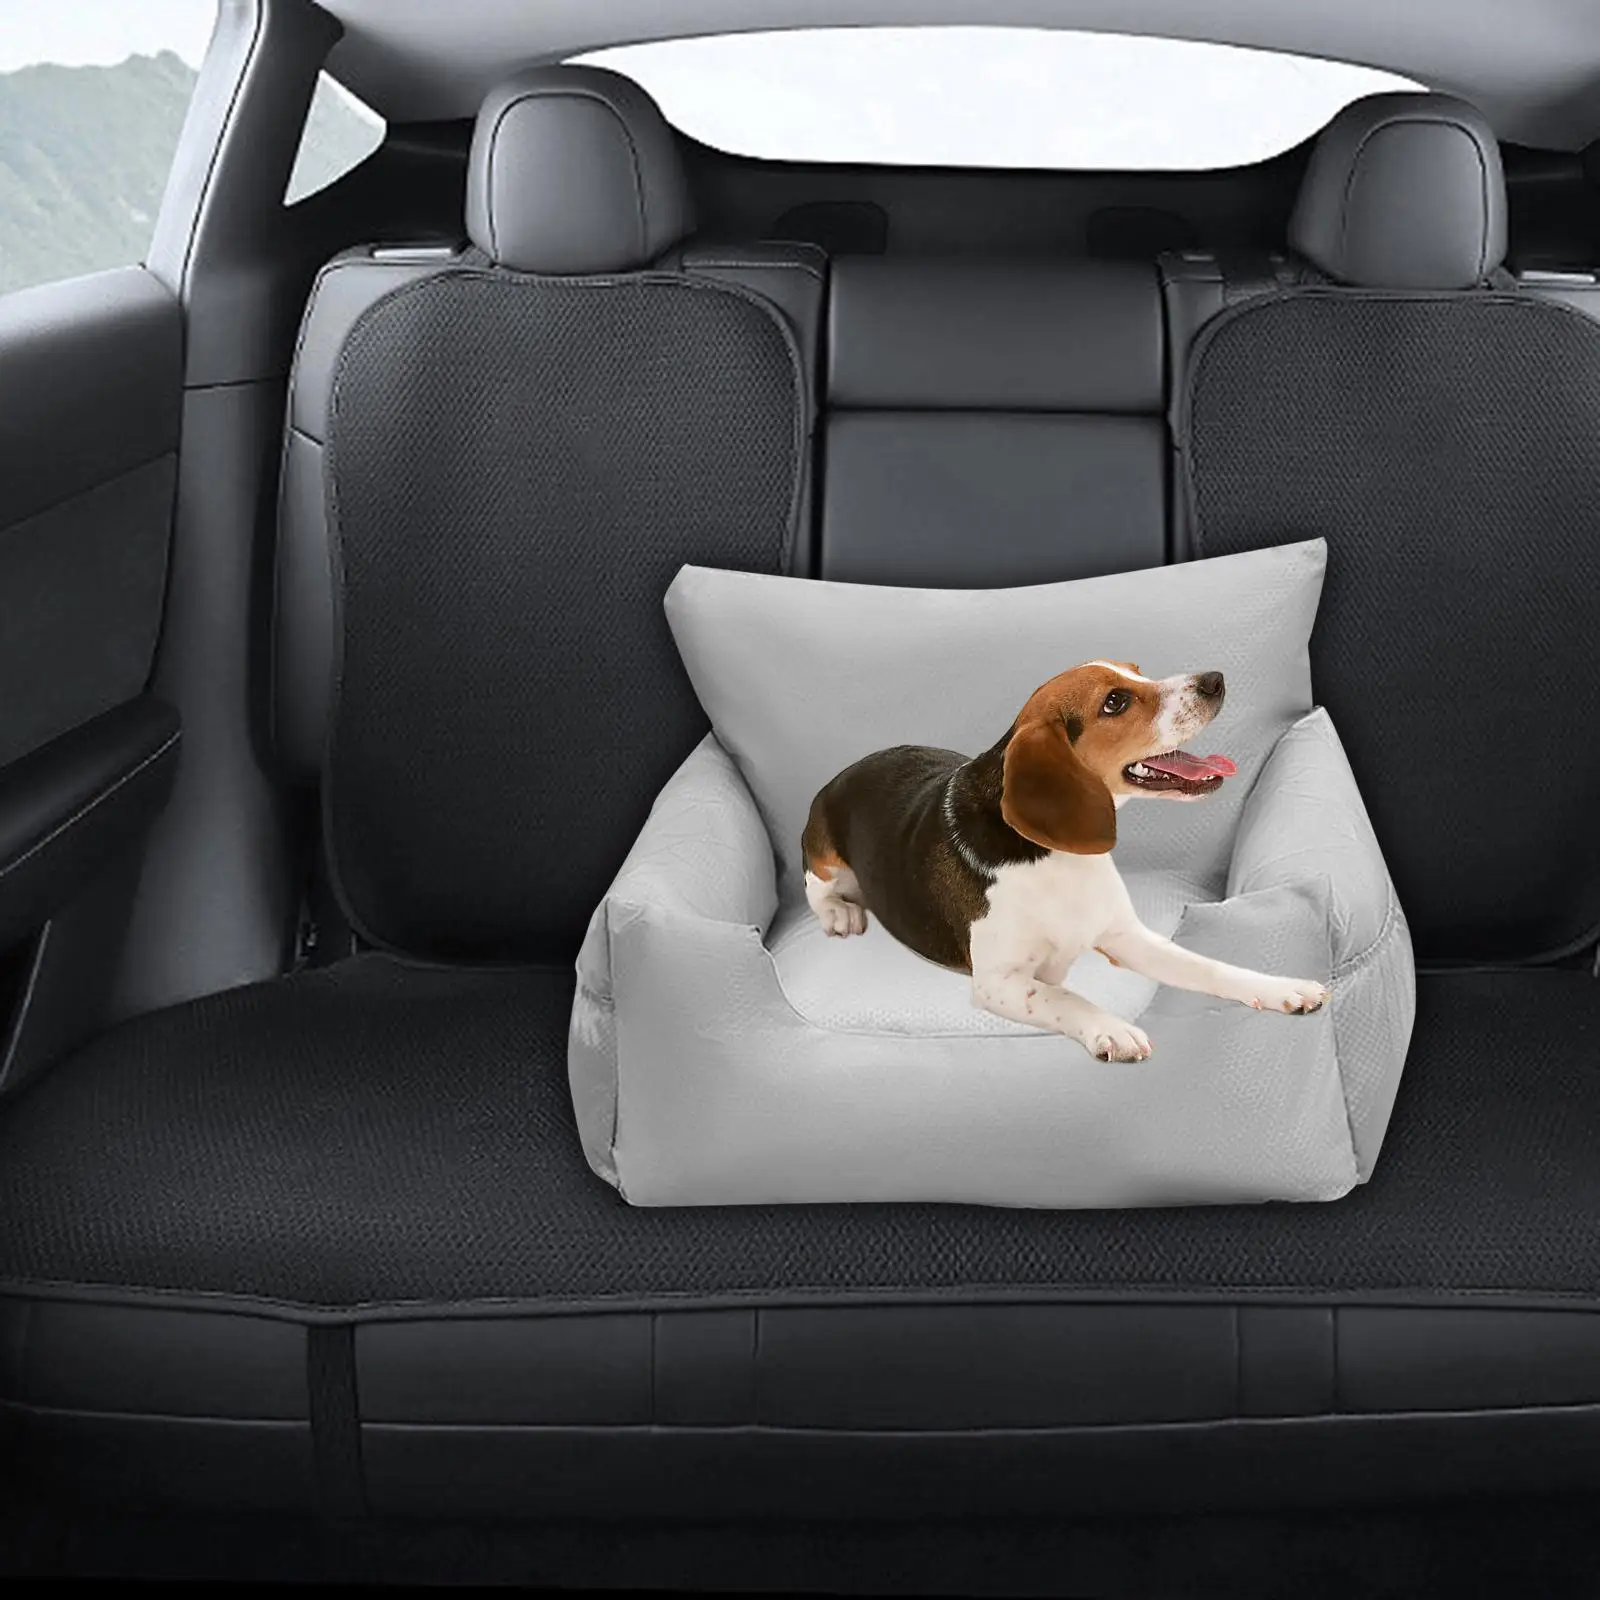 Car Dog Seat Pet Seat Pet Carrier Comfortable Easily Install Oxford Fabric